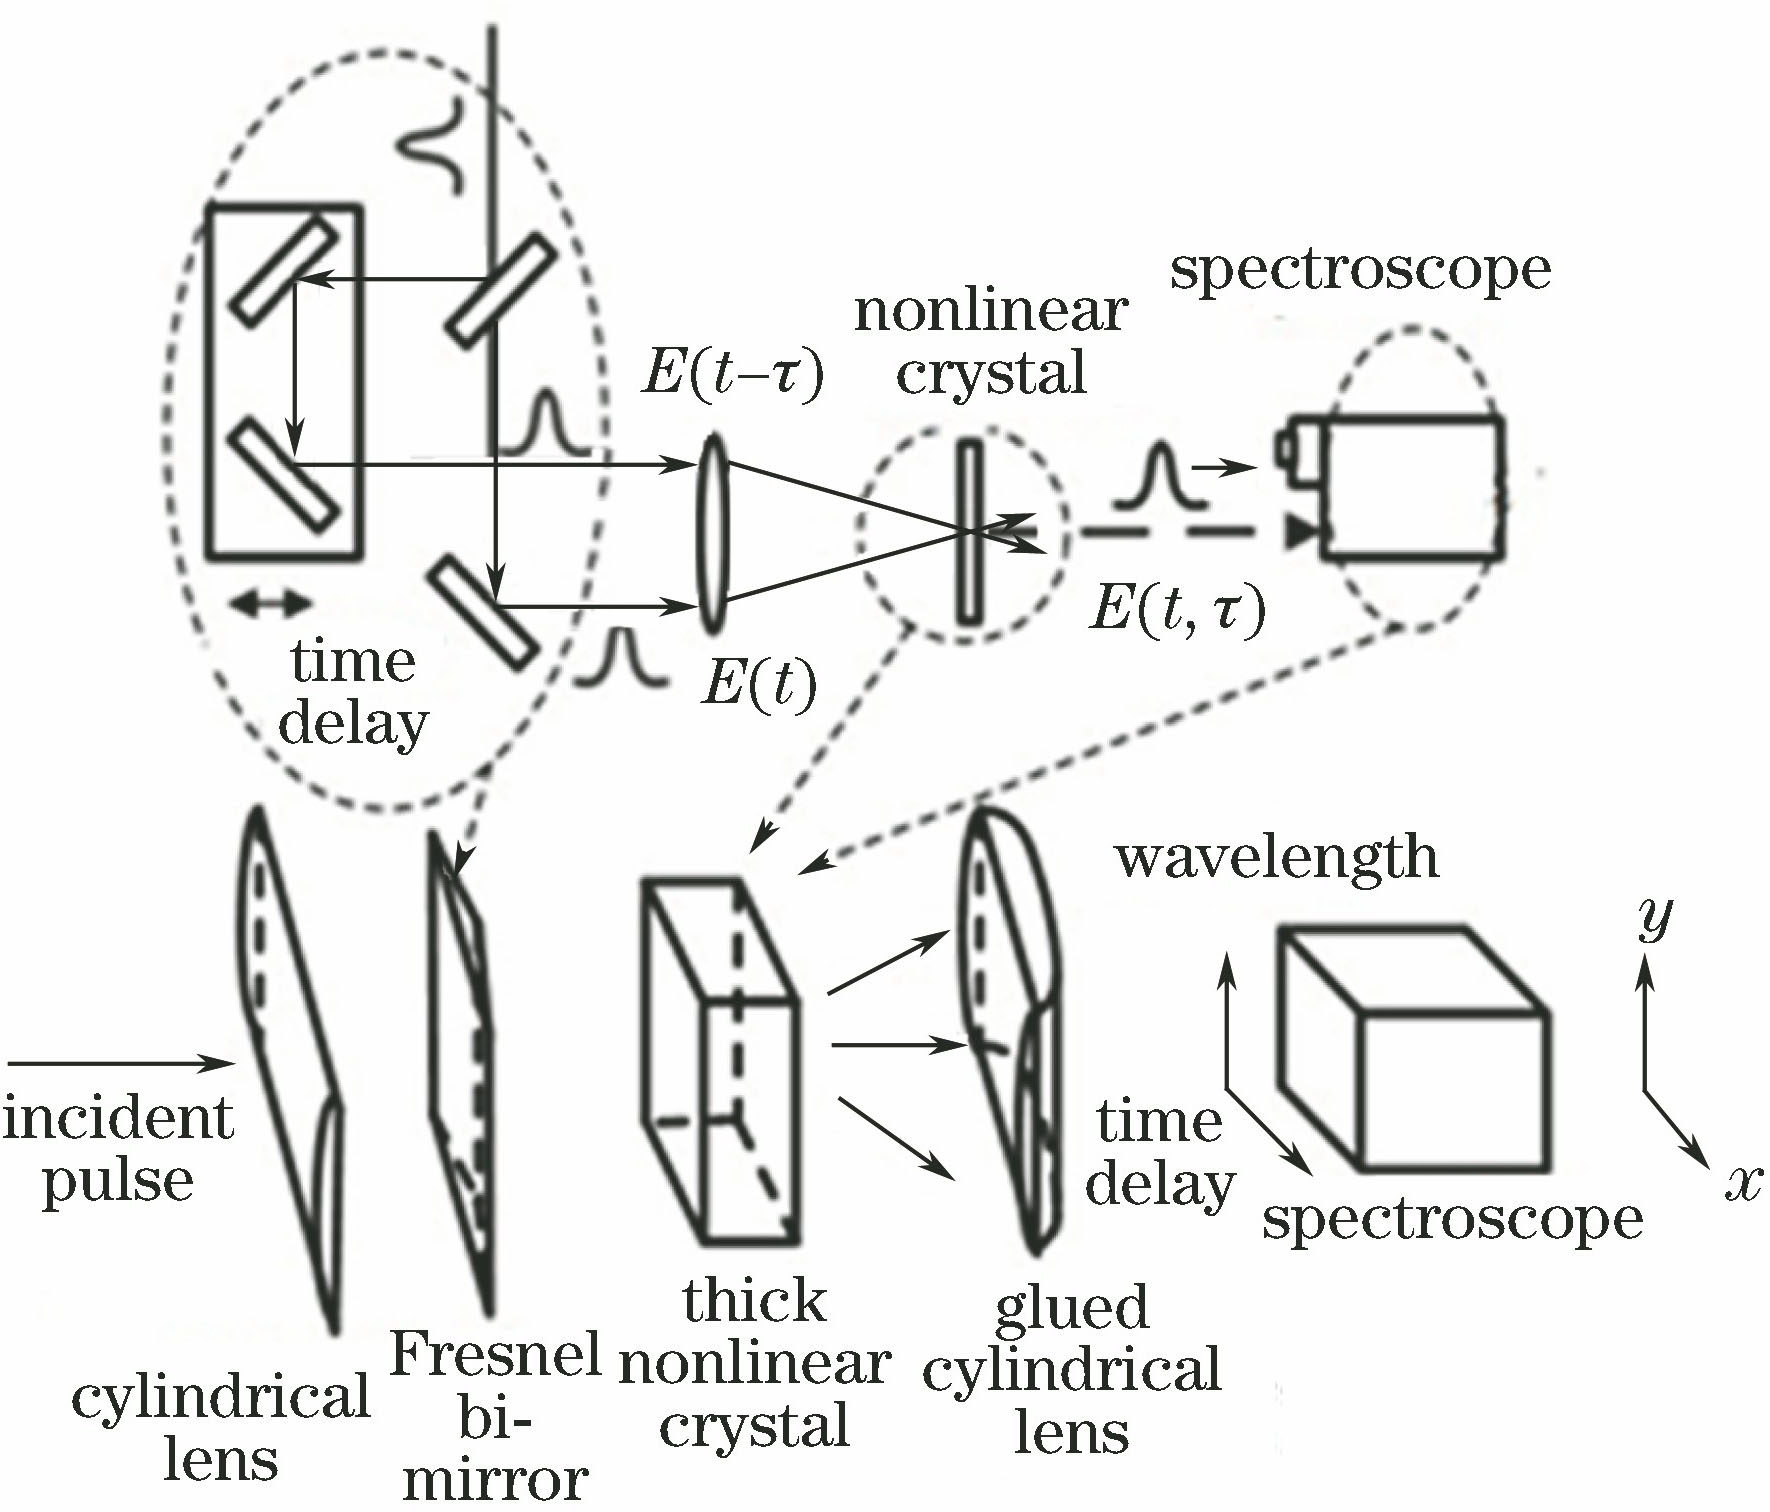 Structure of transmissive G system[18]